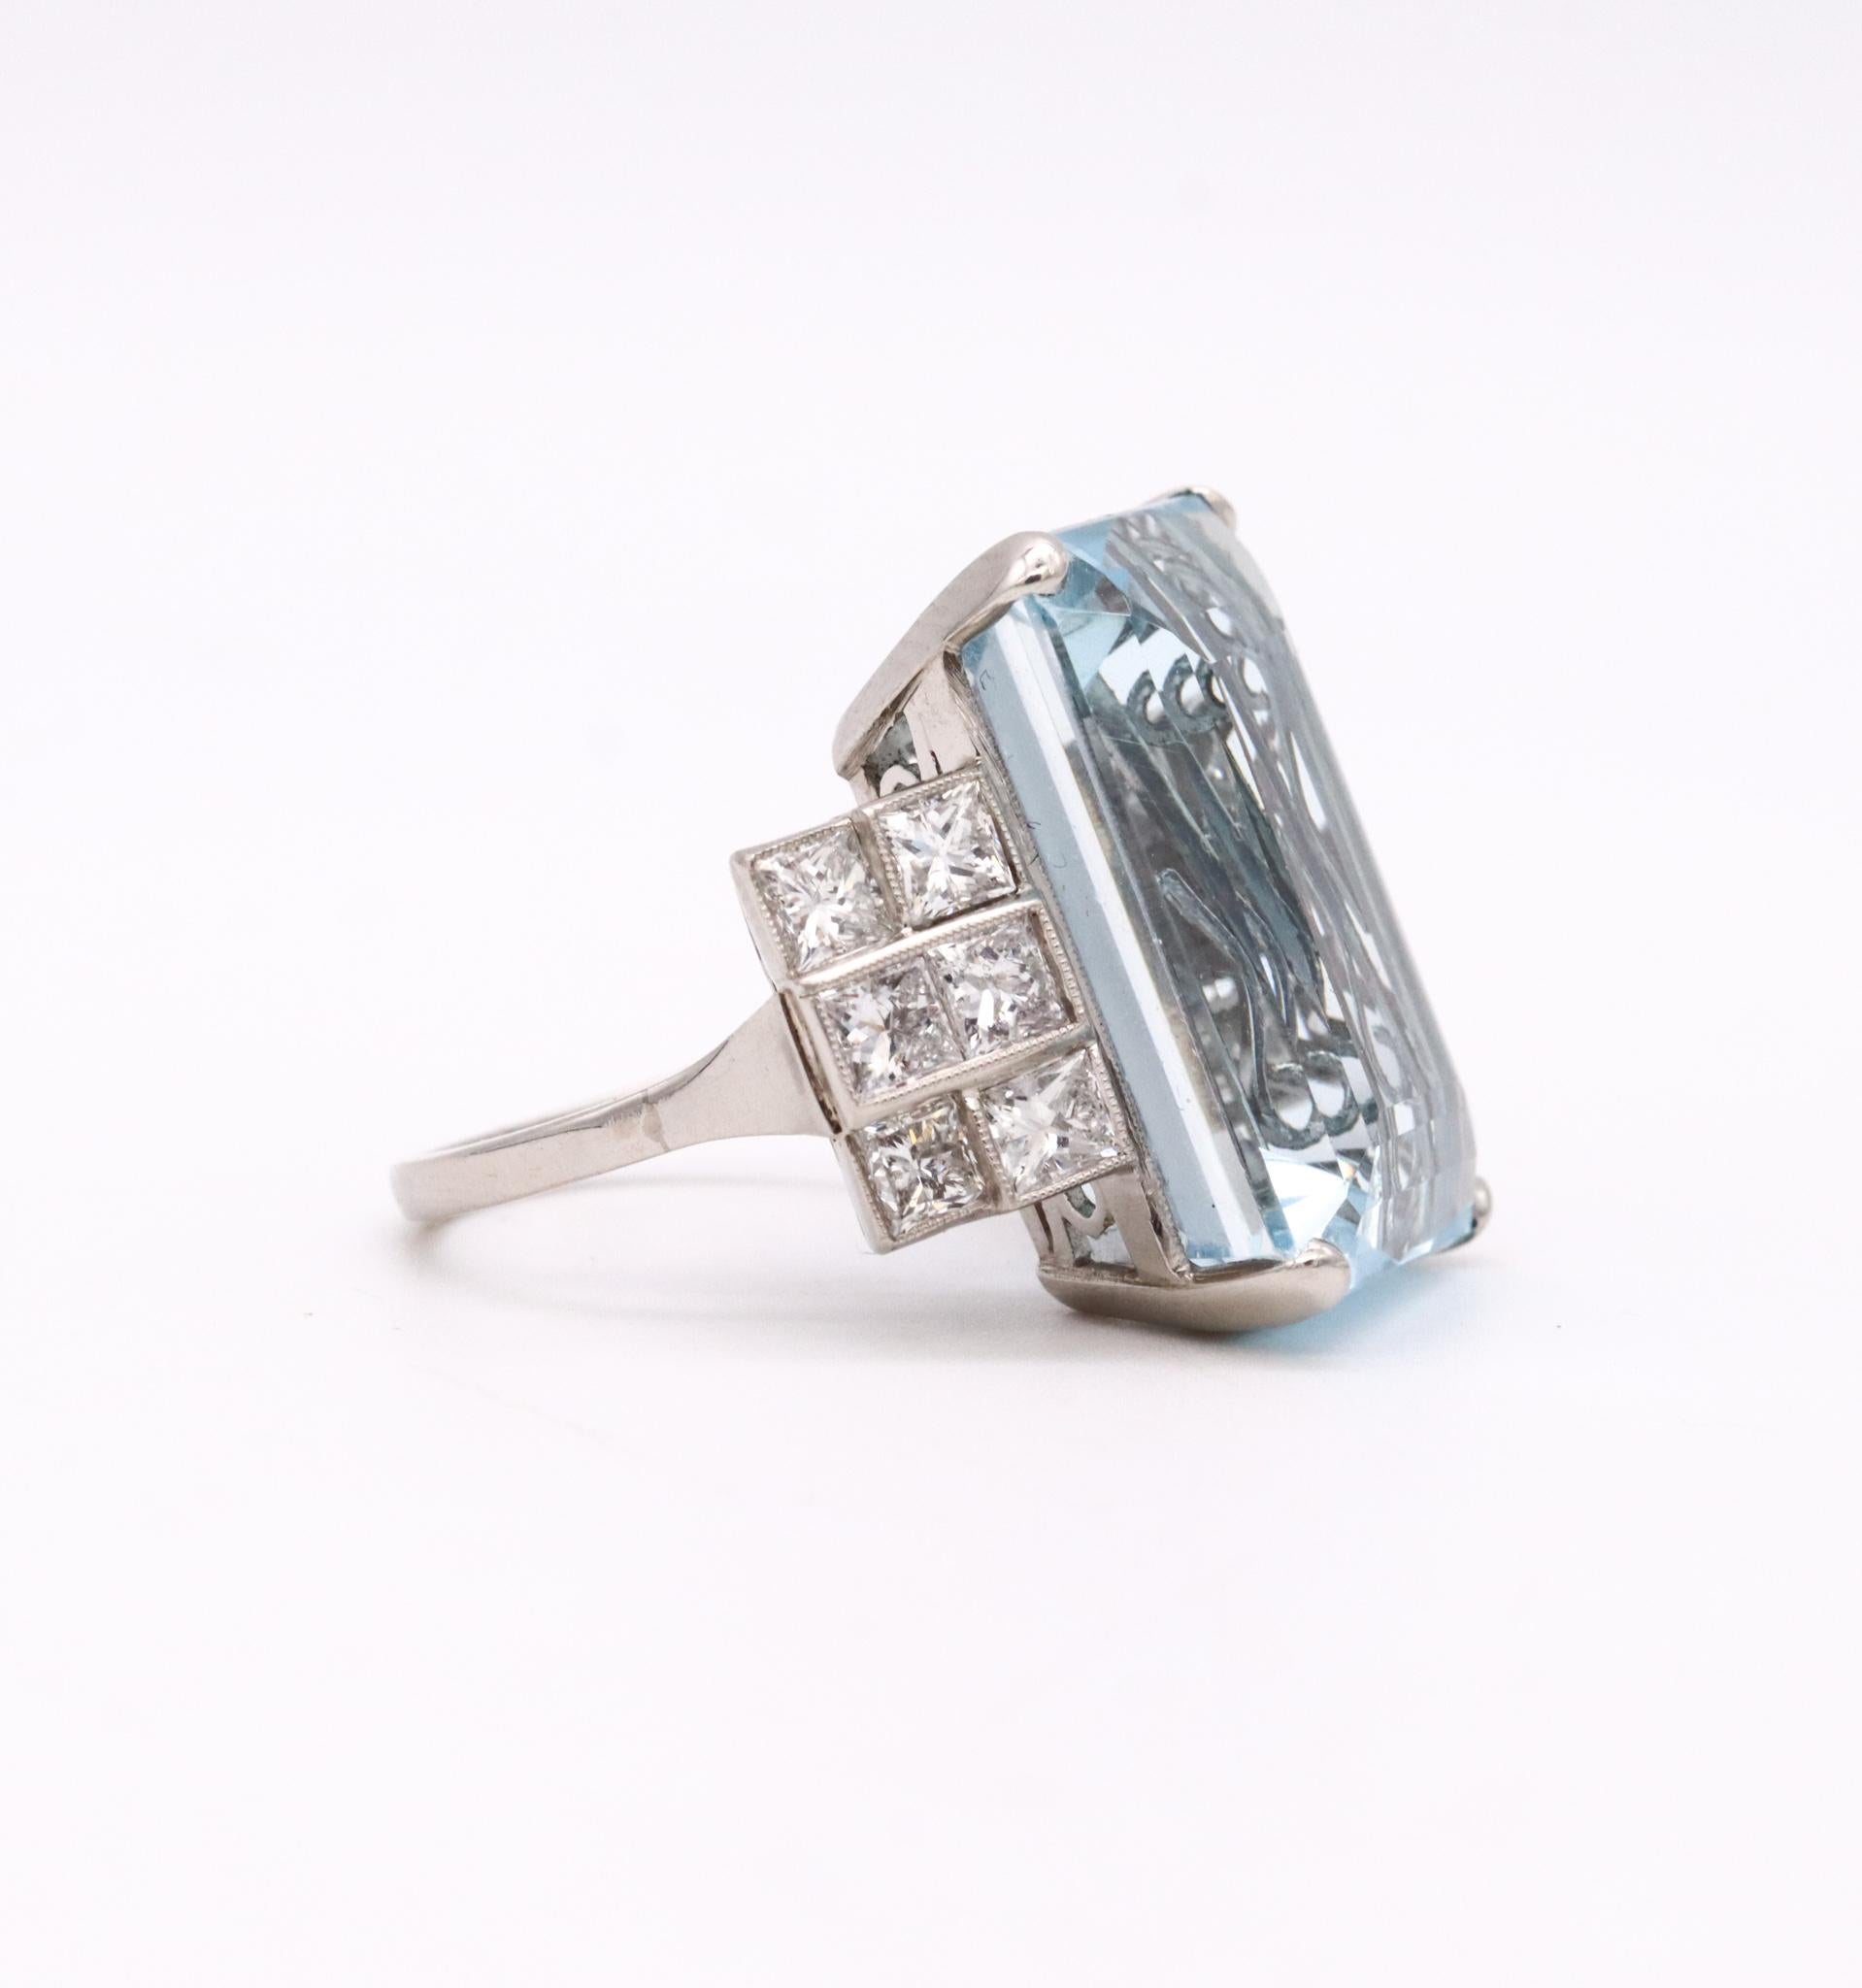 Platinum 1938 Art Deco Statement Ring with 28.44 Cts in Aquamarine and Diamonds 1